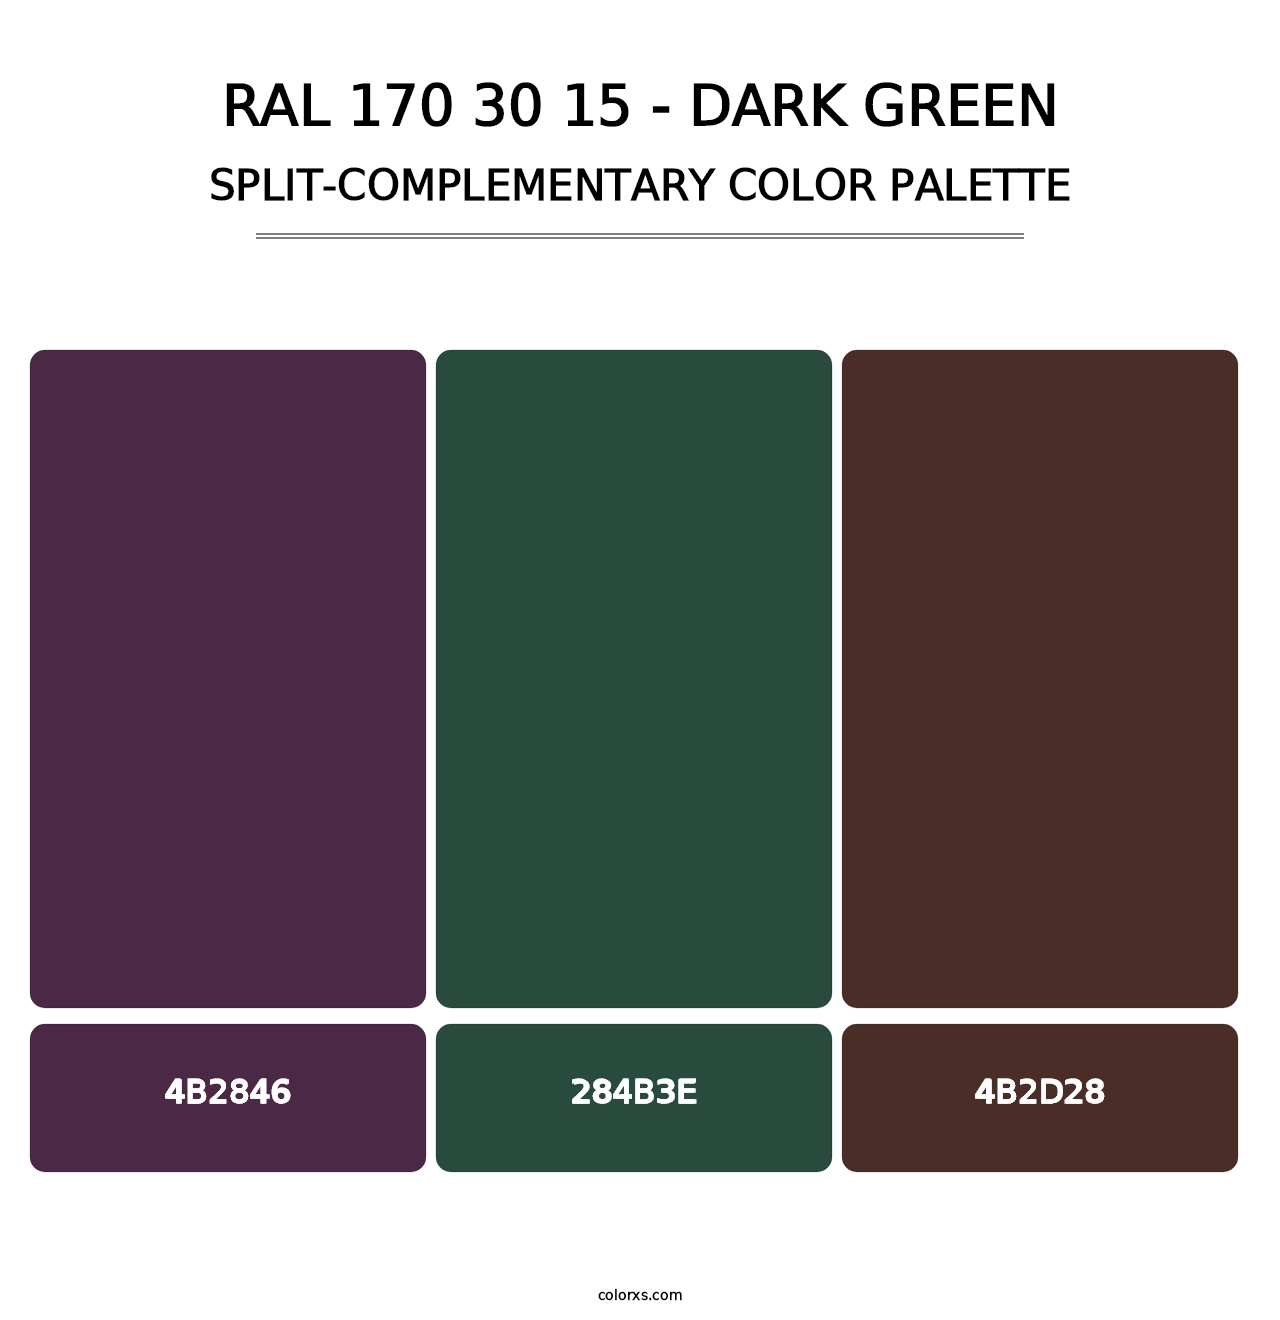 RAL 170 30 15 - Dark Green - Split-Complementary Color Palette